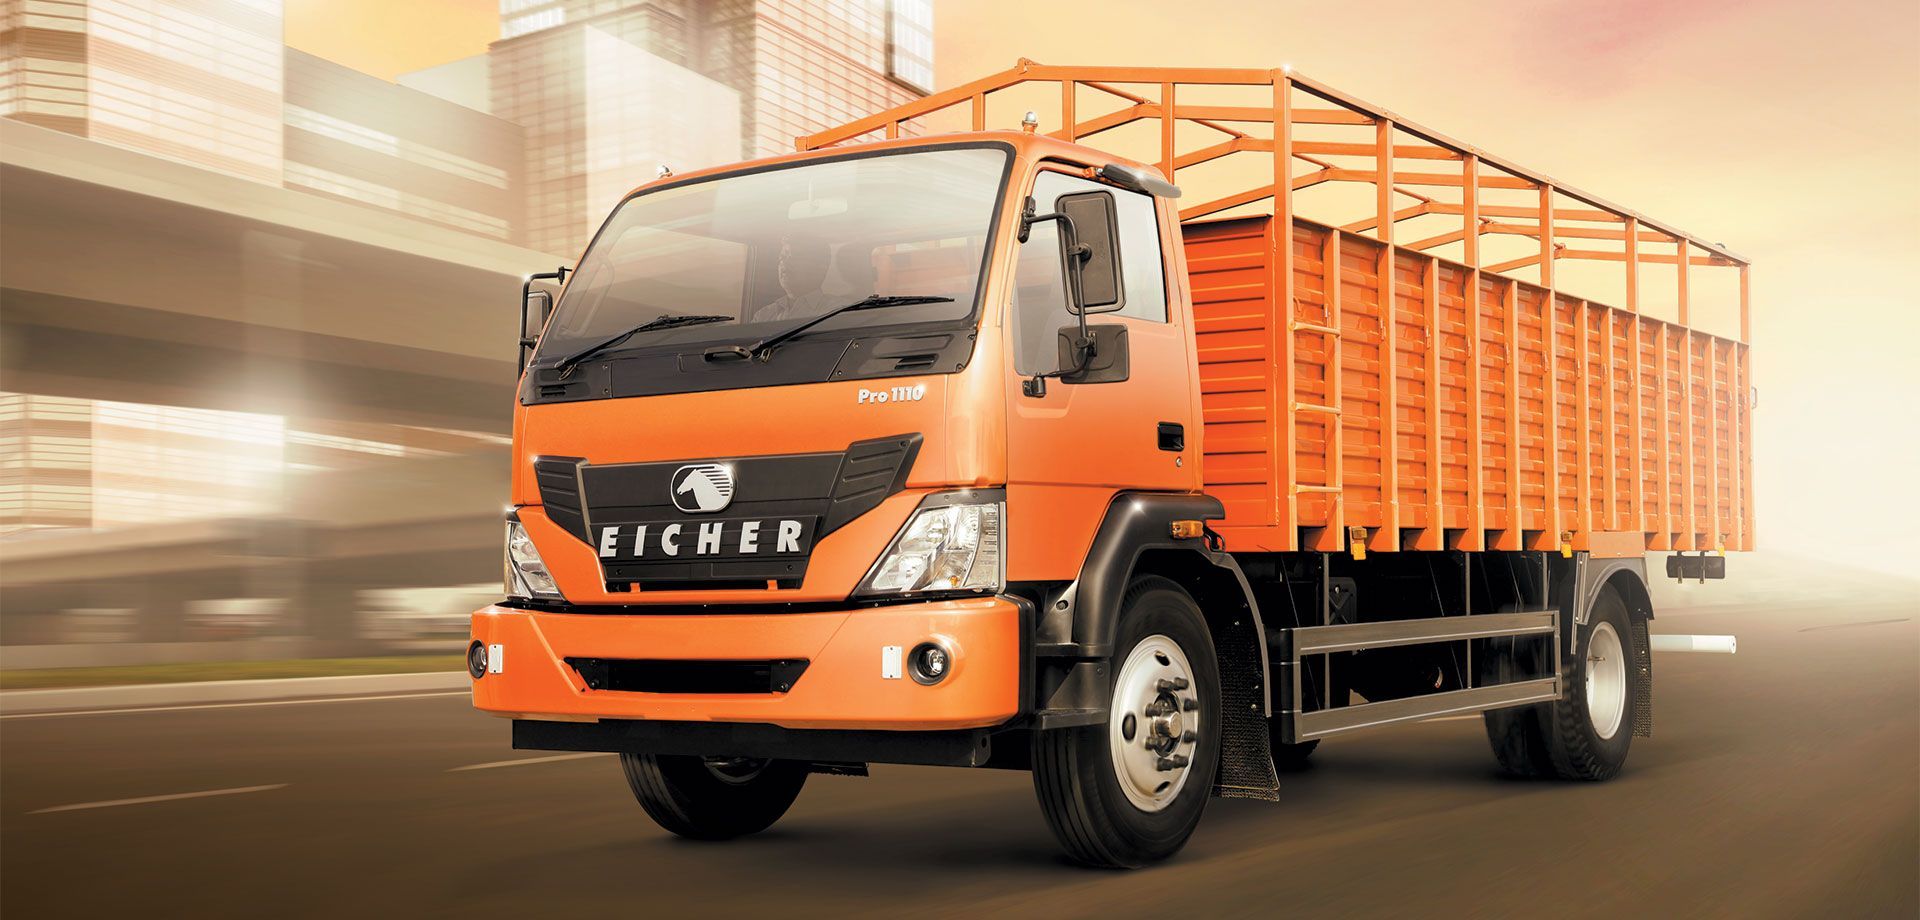 Eicher Pro 1110. Light Commercial Trucks India. 11.10. Trucks, New trucks, White truck